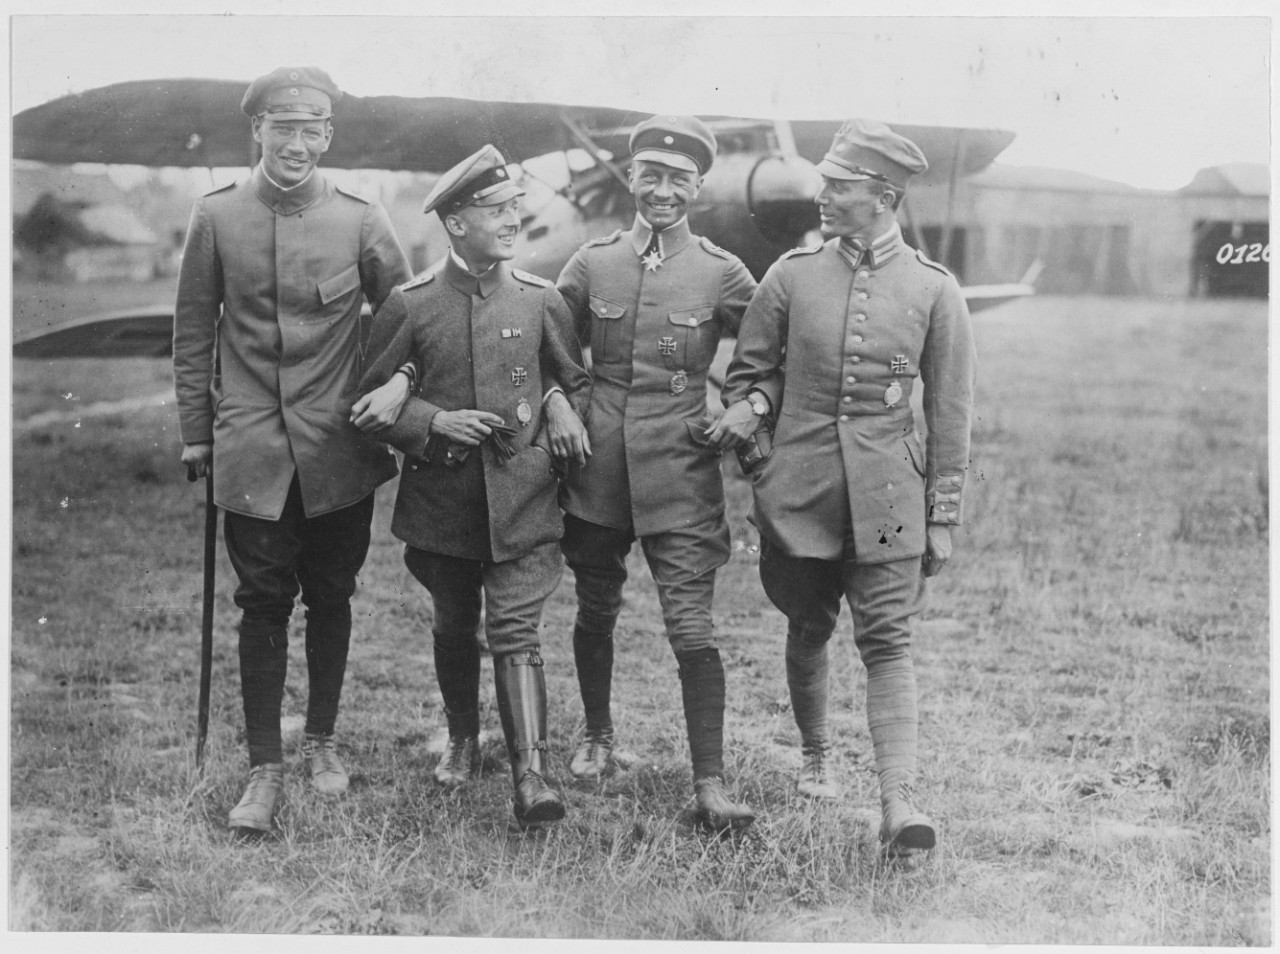 With the German Aviators, Captain Schleide, Lieutenant Roeth